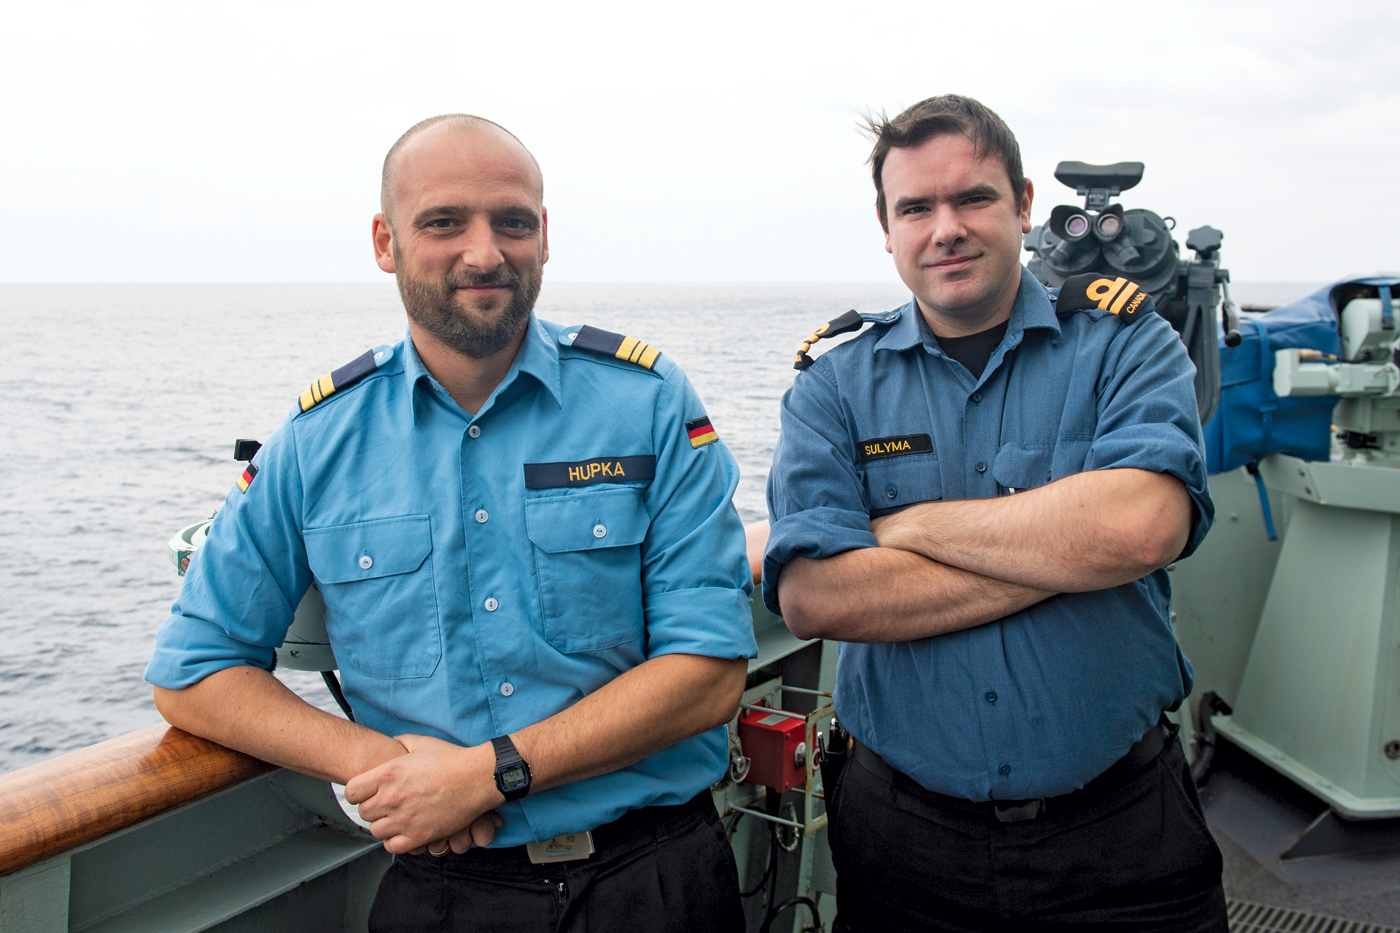 Kapitänleutnant Tim Hupka and Lieutenant (Navy) Christopher Sulyma